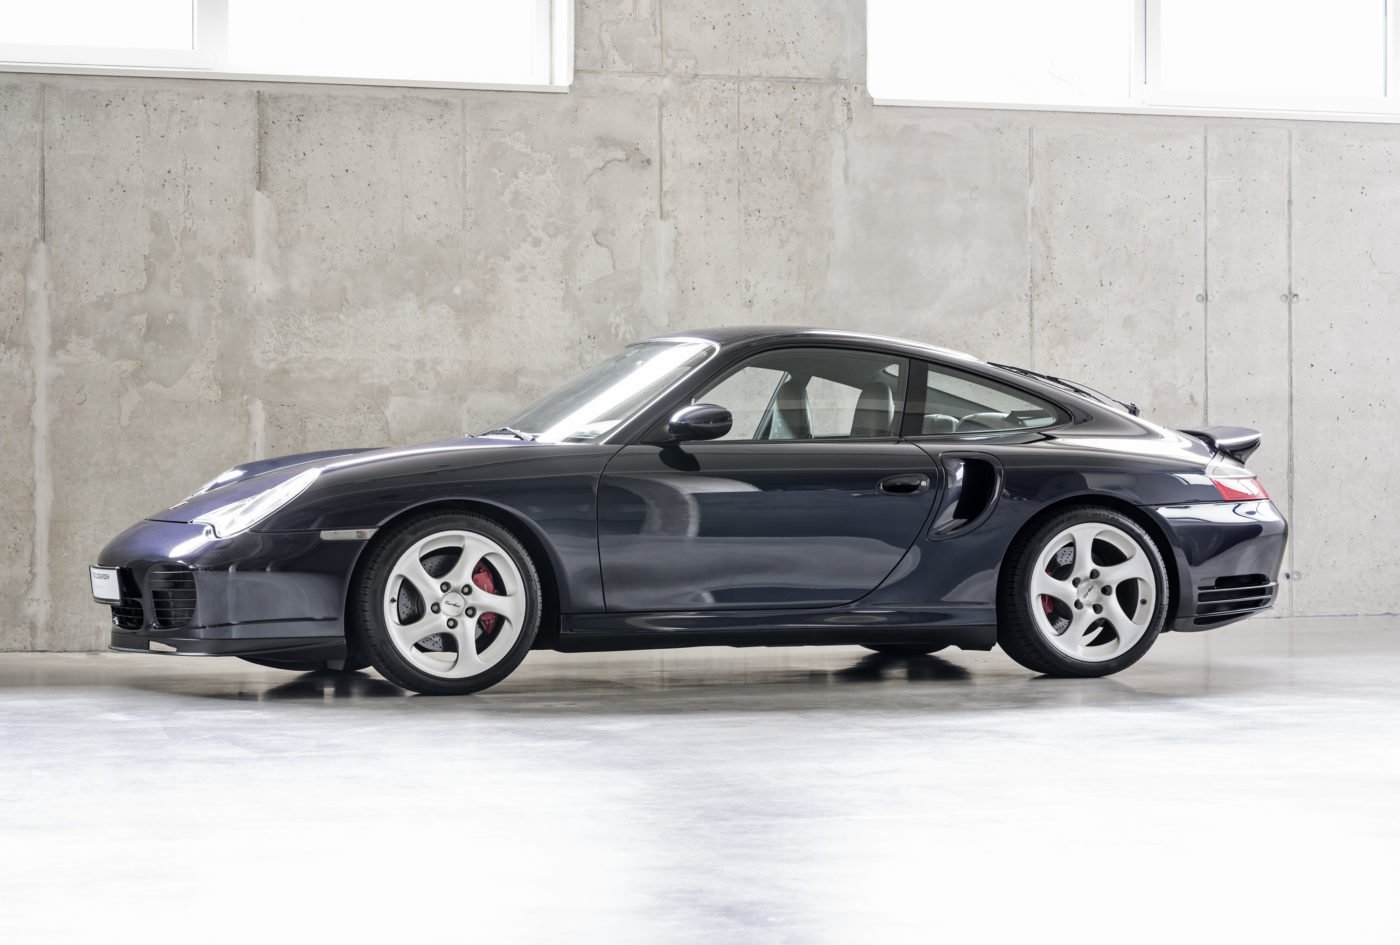 https://cdn.elferspot.com/wp-content/uploads/2019/12/Porsche-911-996-Turbo-WLS-Motorlegenen-Michael-Schnabl-4.jpg